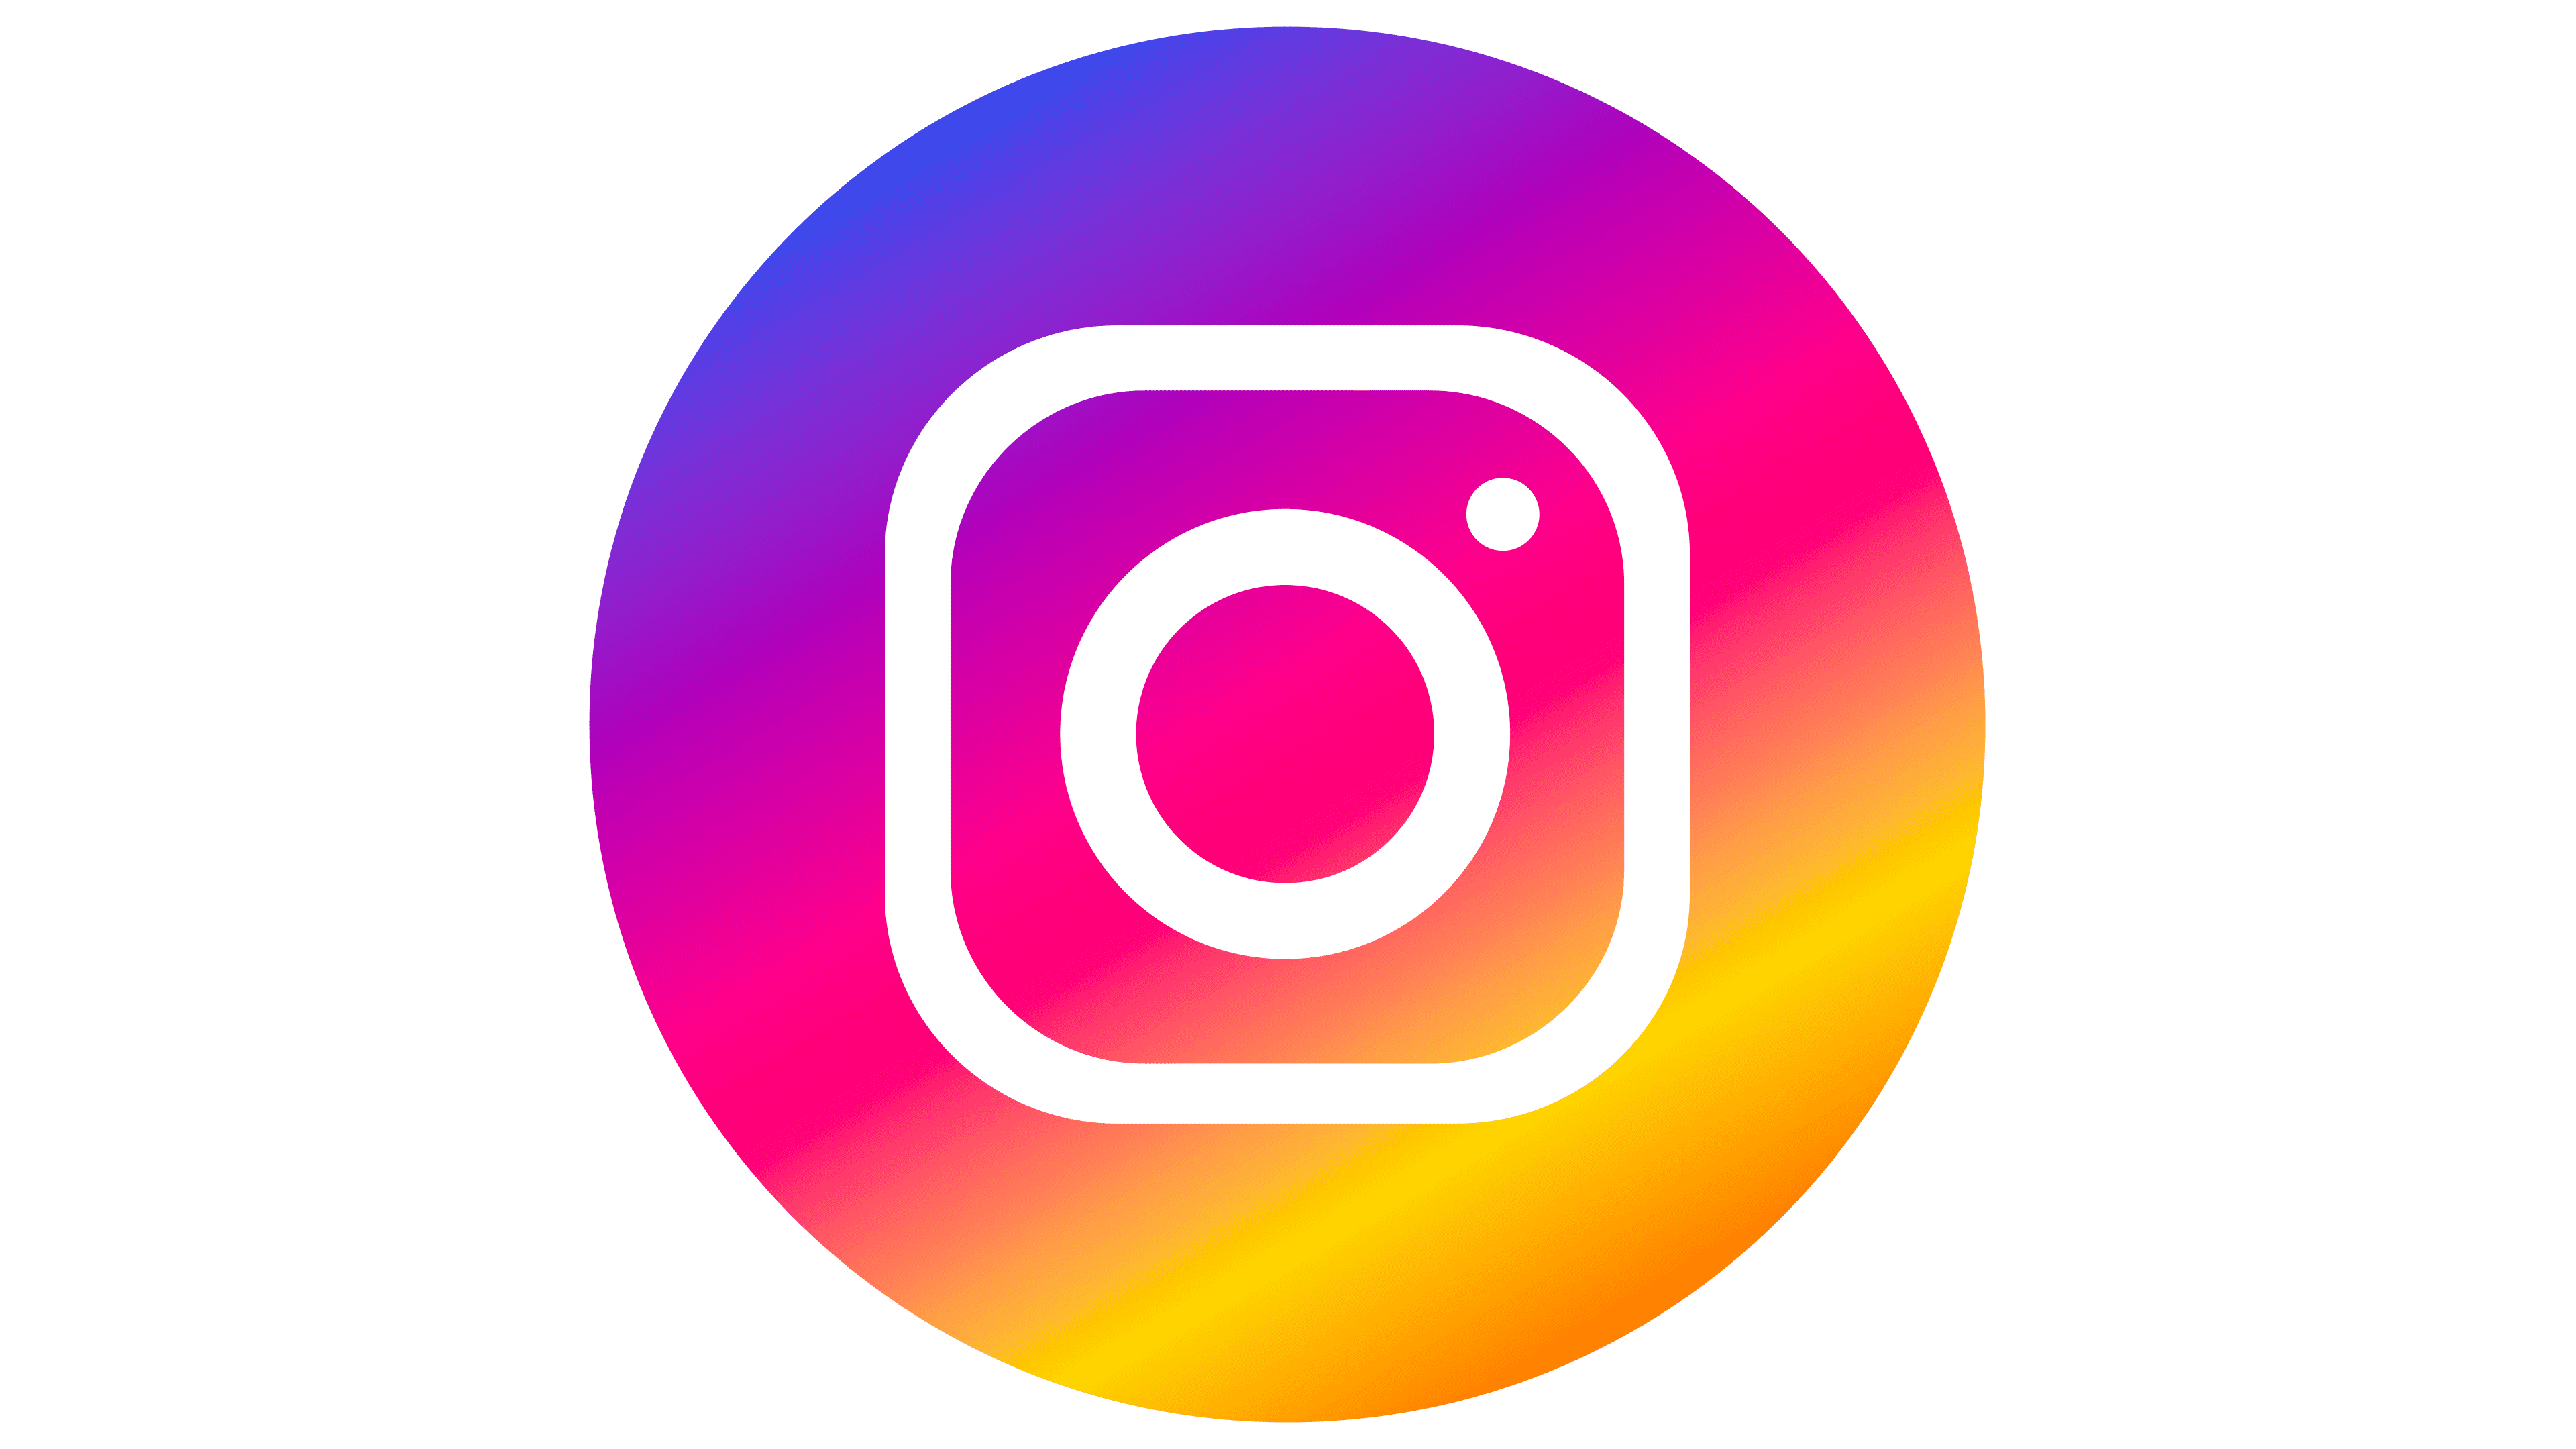 Www instagram com. Instagram. Instagram logo. Иконка инстаграмма PNG. Лого инстаграмма и ВК.